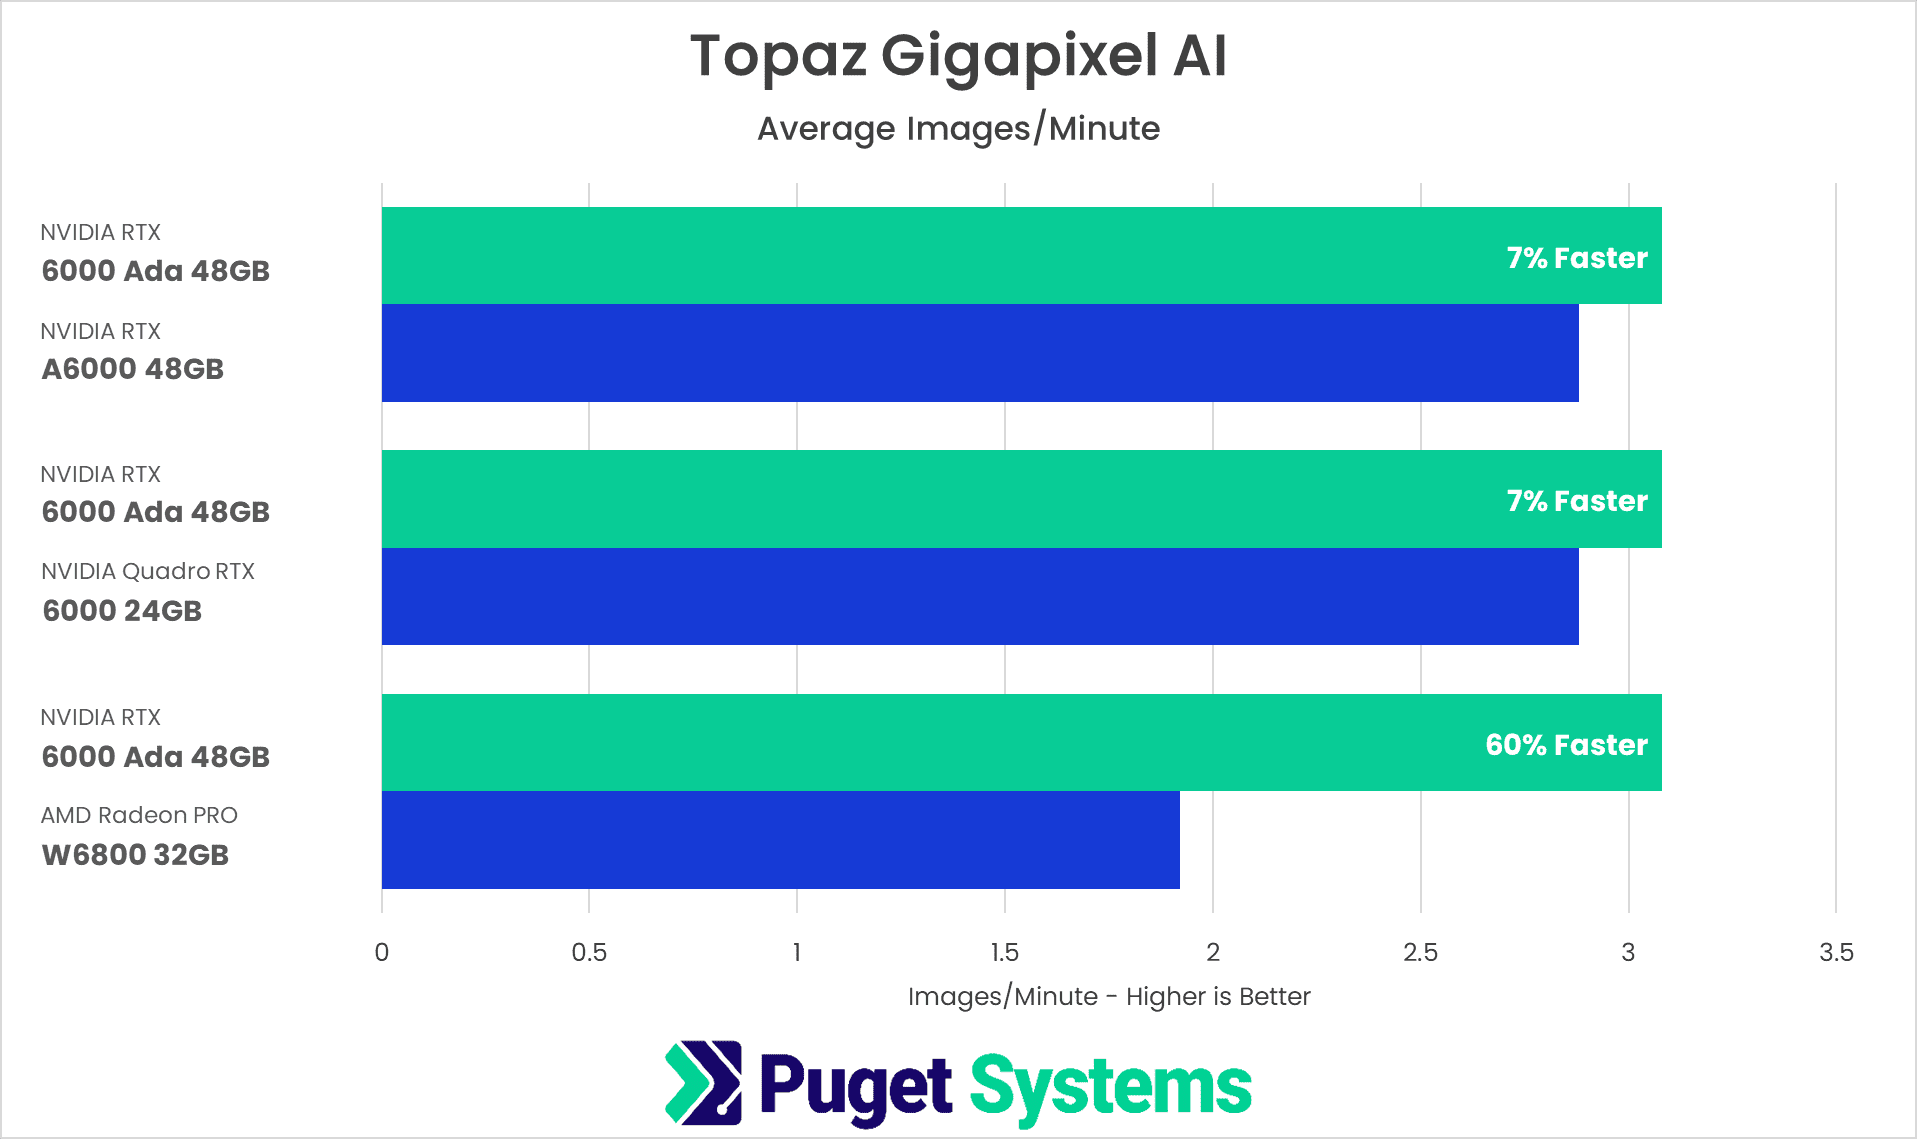 Topaz Gigapixel AI Benchmark NVIDIA RTX 6000 Ada vs RTX A6000 vs RTX 6000 vs W6800